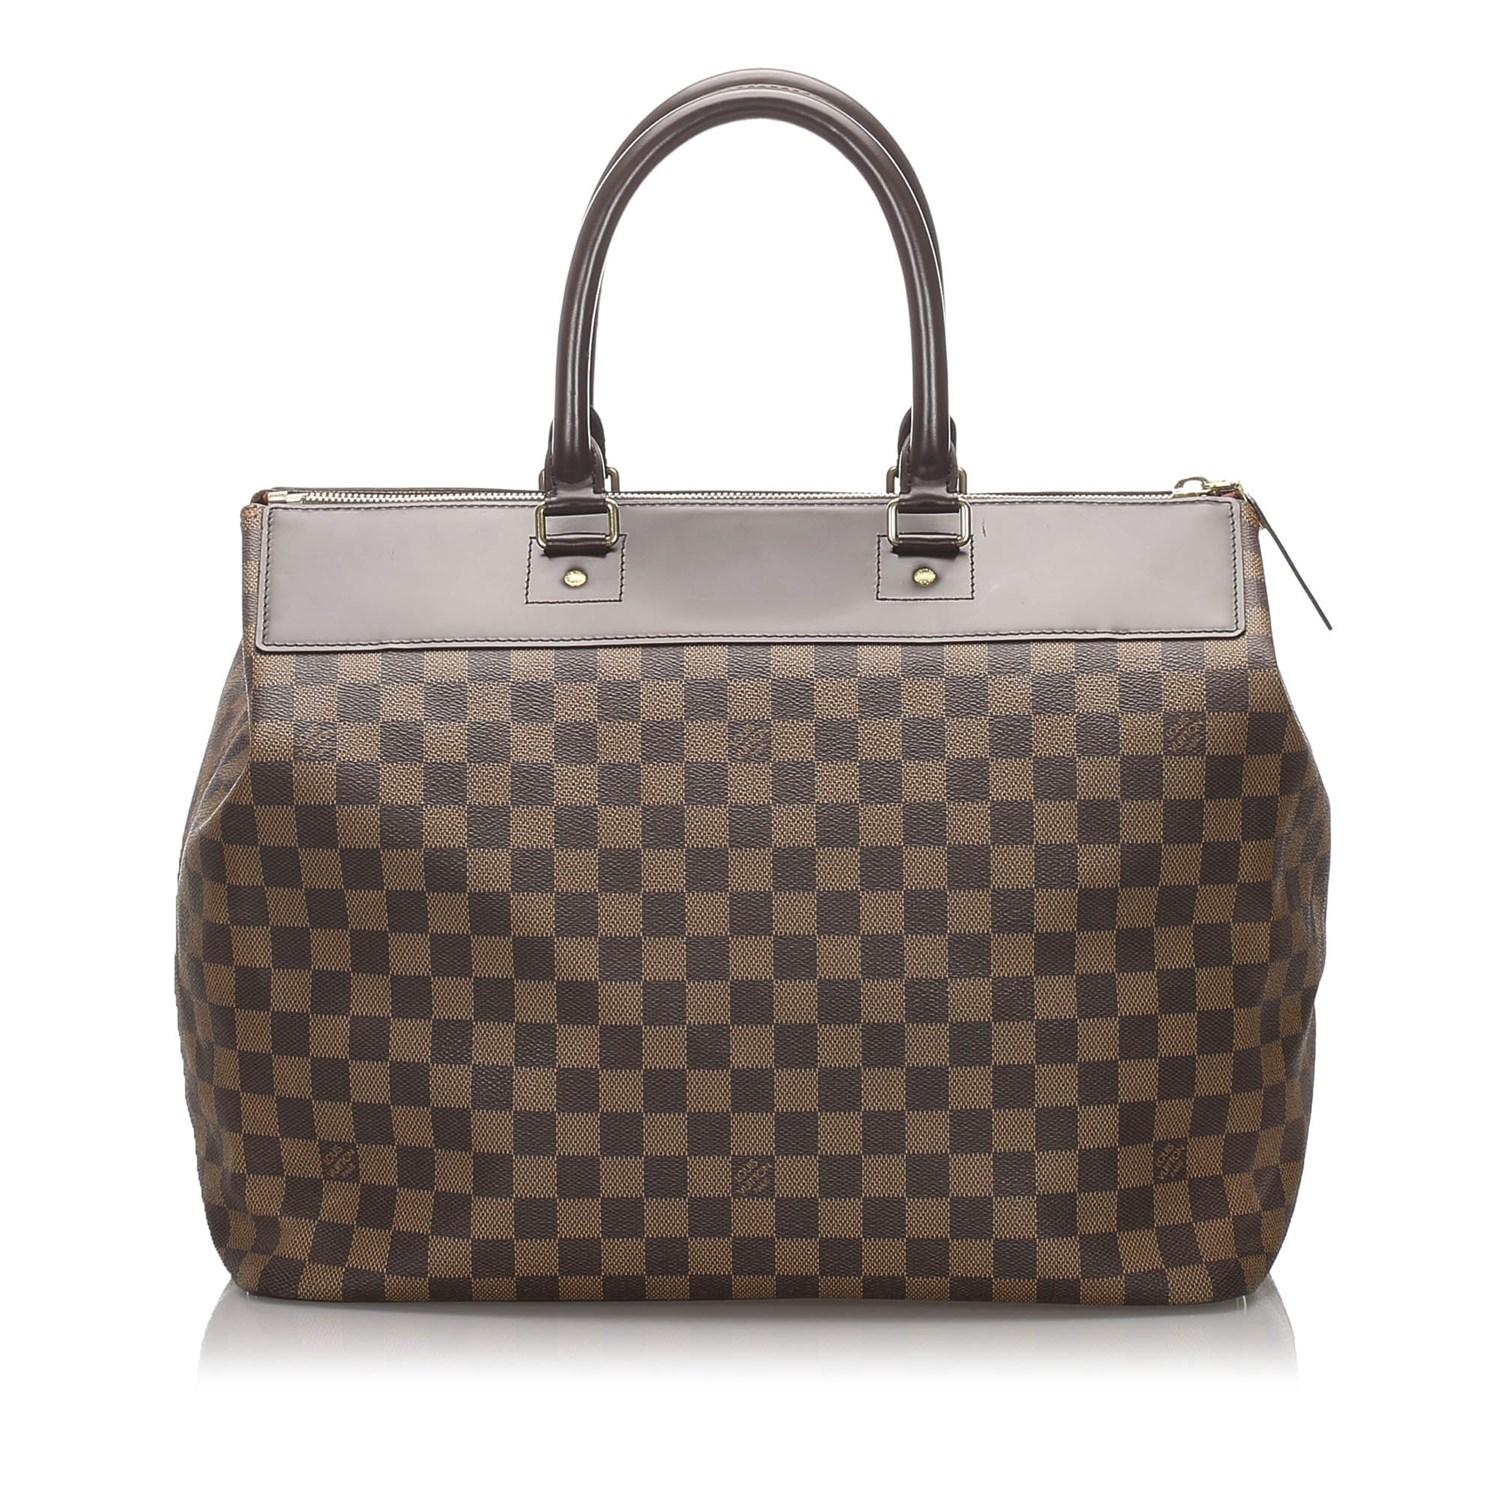 Louis Vuitton Canvas Brown Damier Ebene Greenwich Pm Bag for Men - Lyst